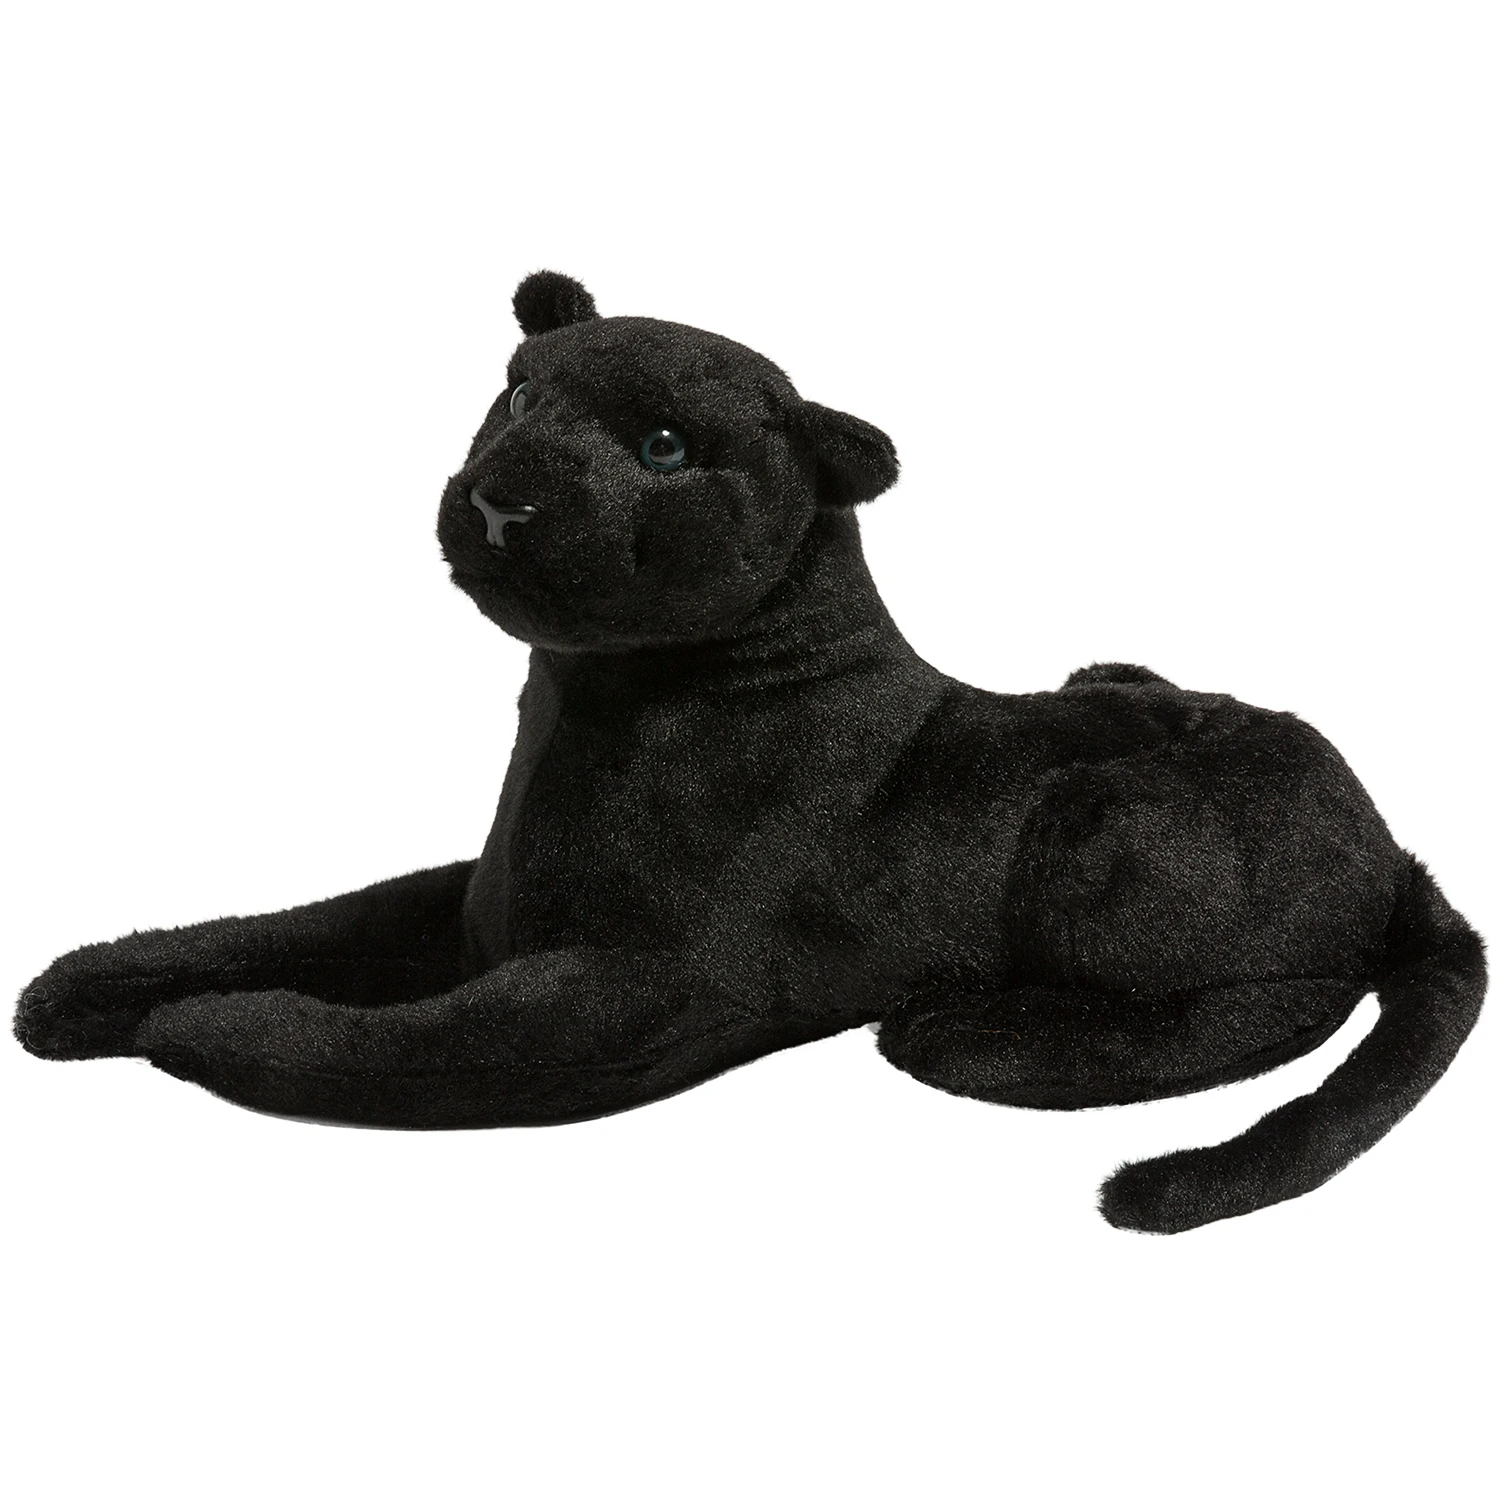 panther stuffed animal